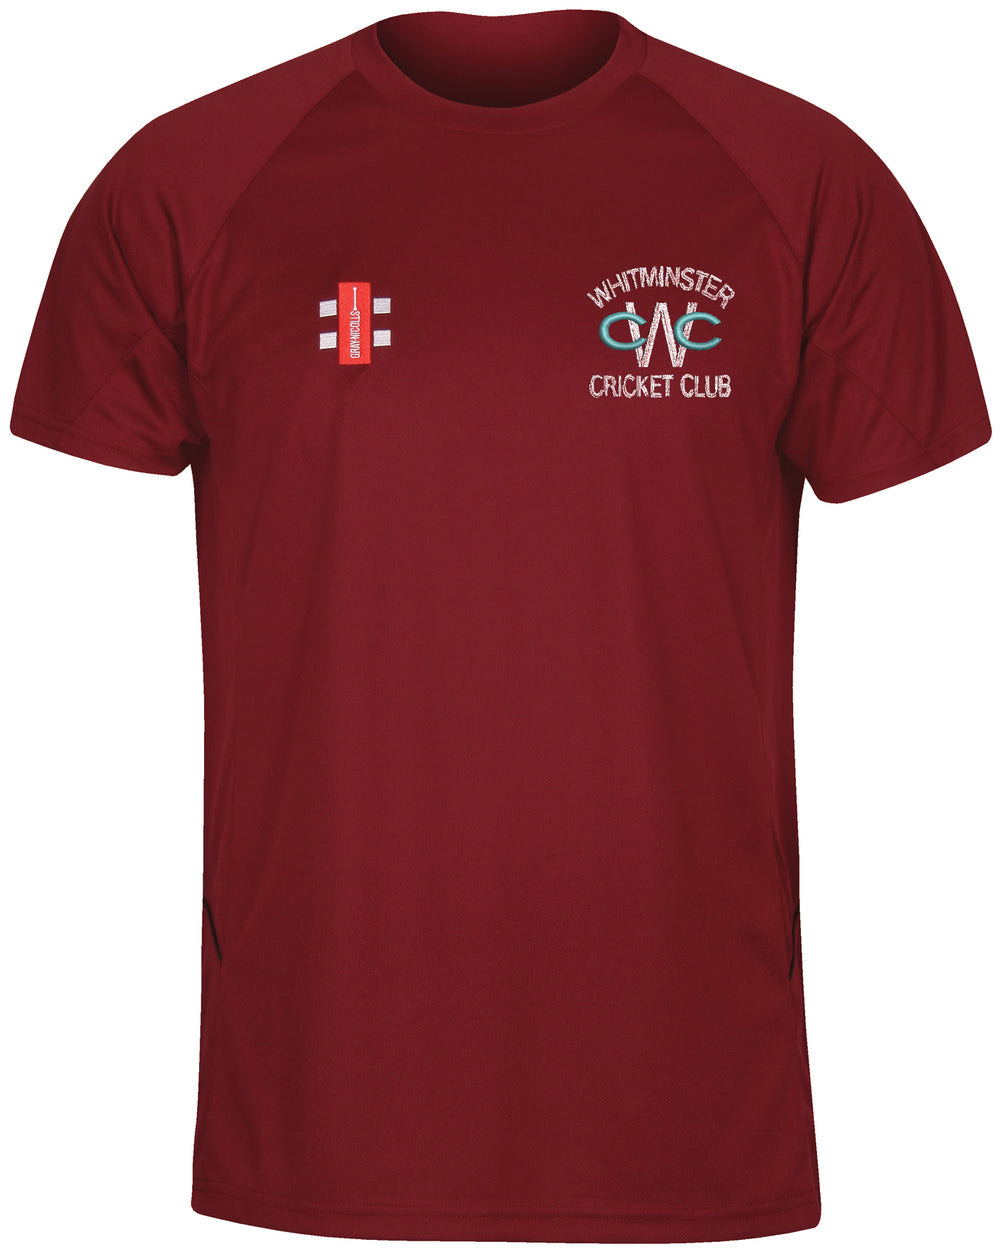 Whitminster CC Matrix T Shirt